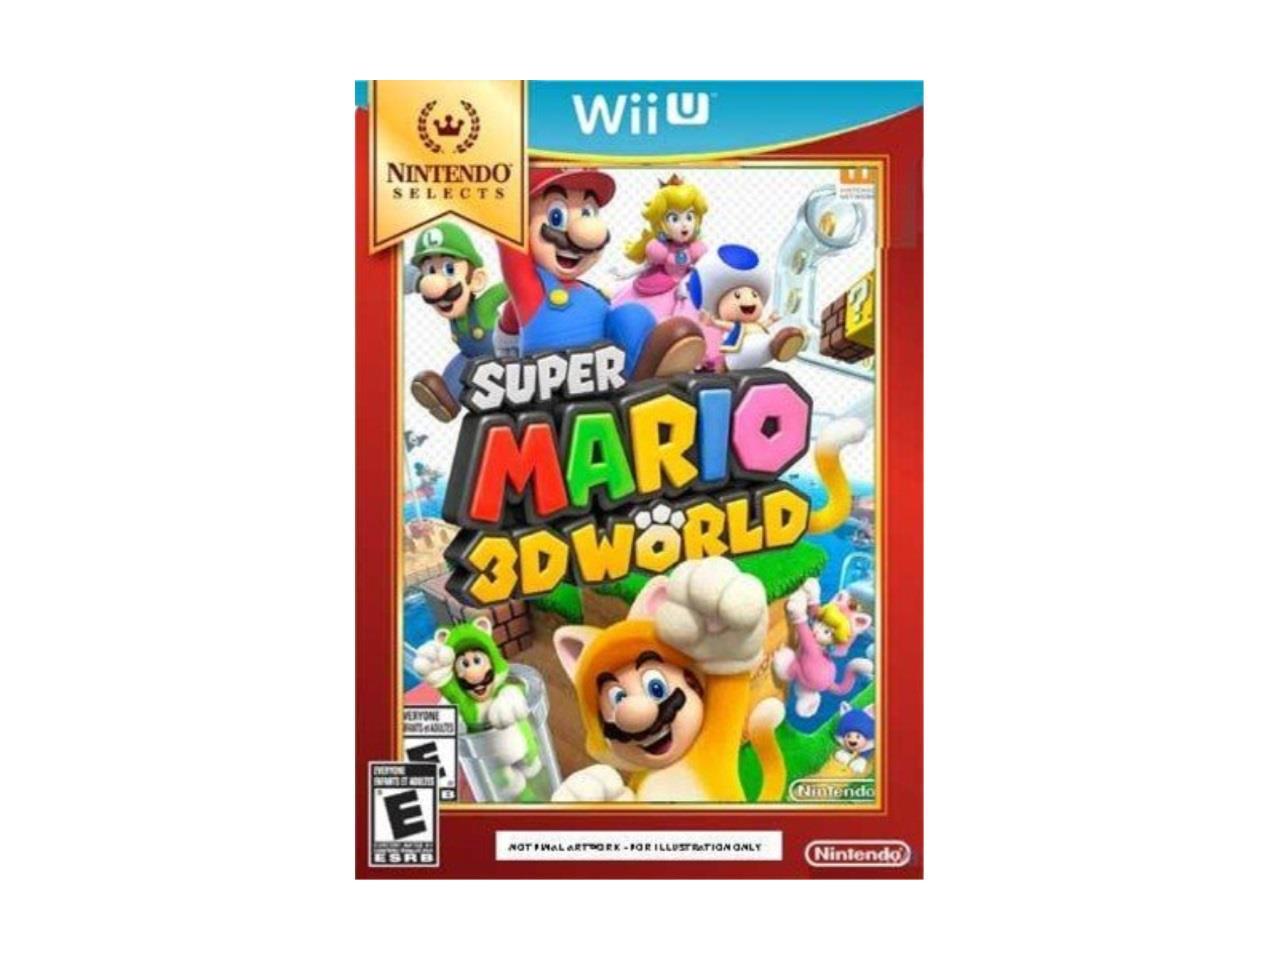 acceptere lærling udvikling Super Mario 3D World - Nintendo Selects - [E] (Wii-U) - Newegg.com